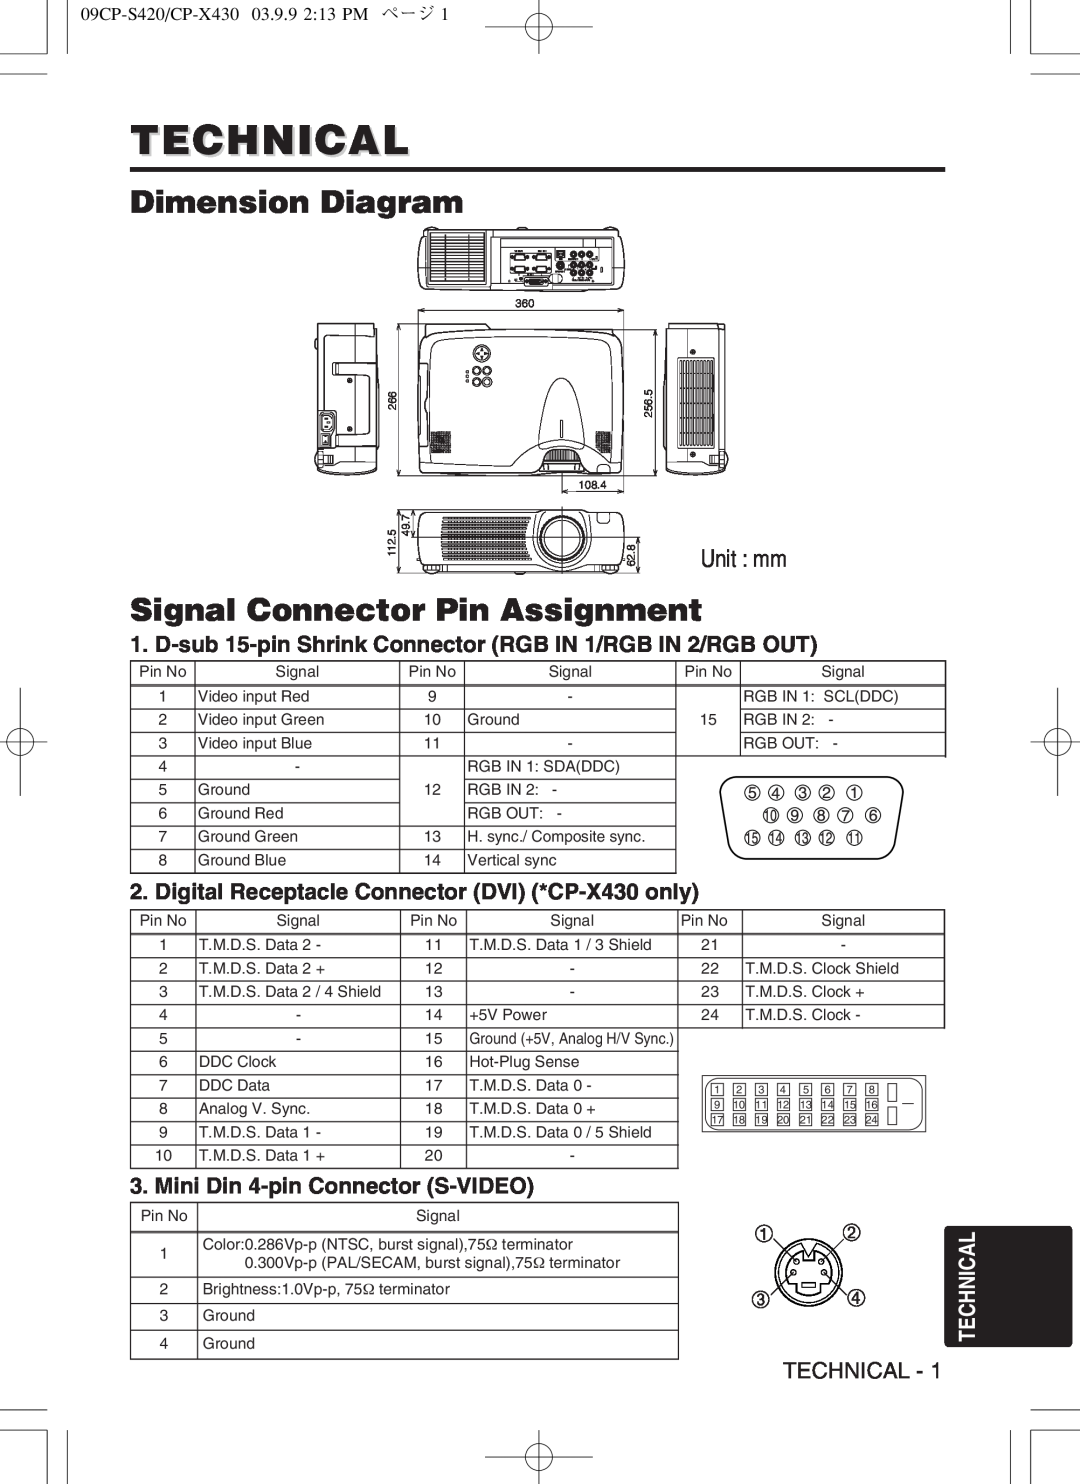 Hitachi CP-X430WA Technical, Dimension Diagram, Signal Connector Pin Assignment, Mini Din 4-pinConnector S-VIDEO, Unit mm 